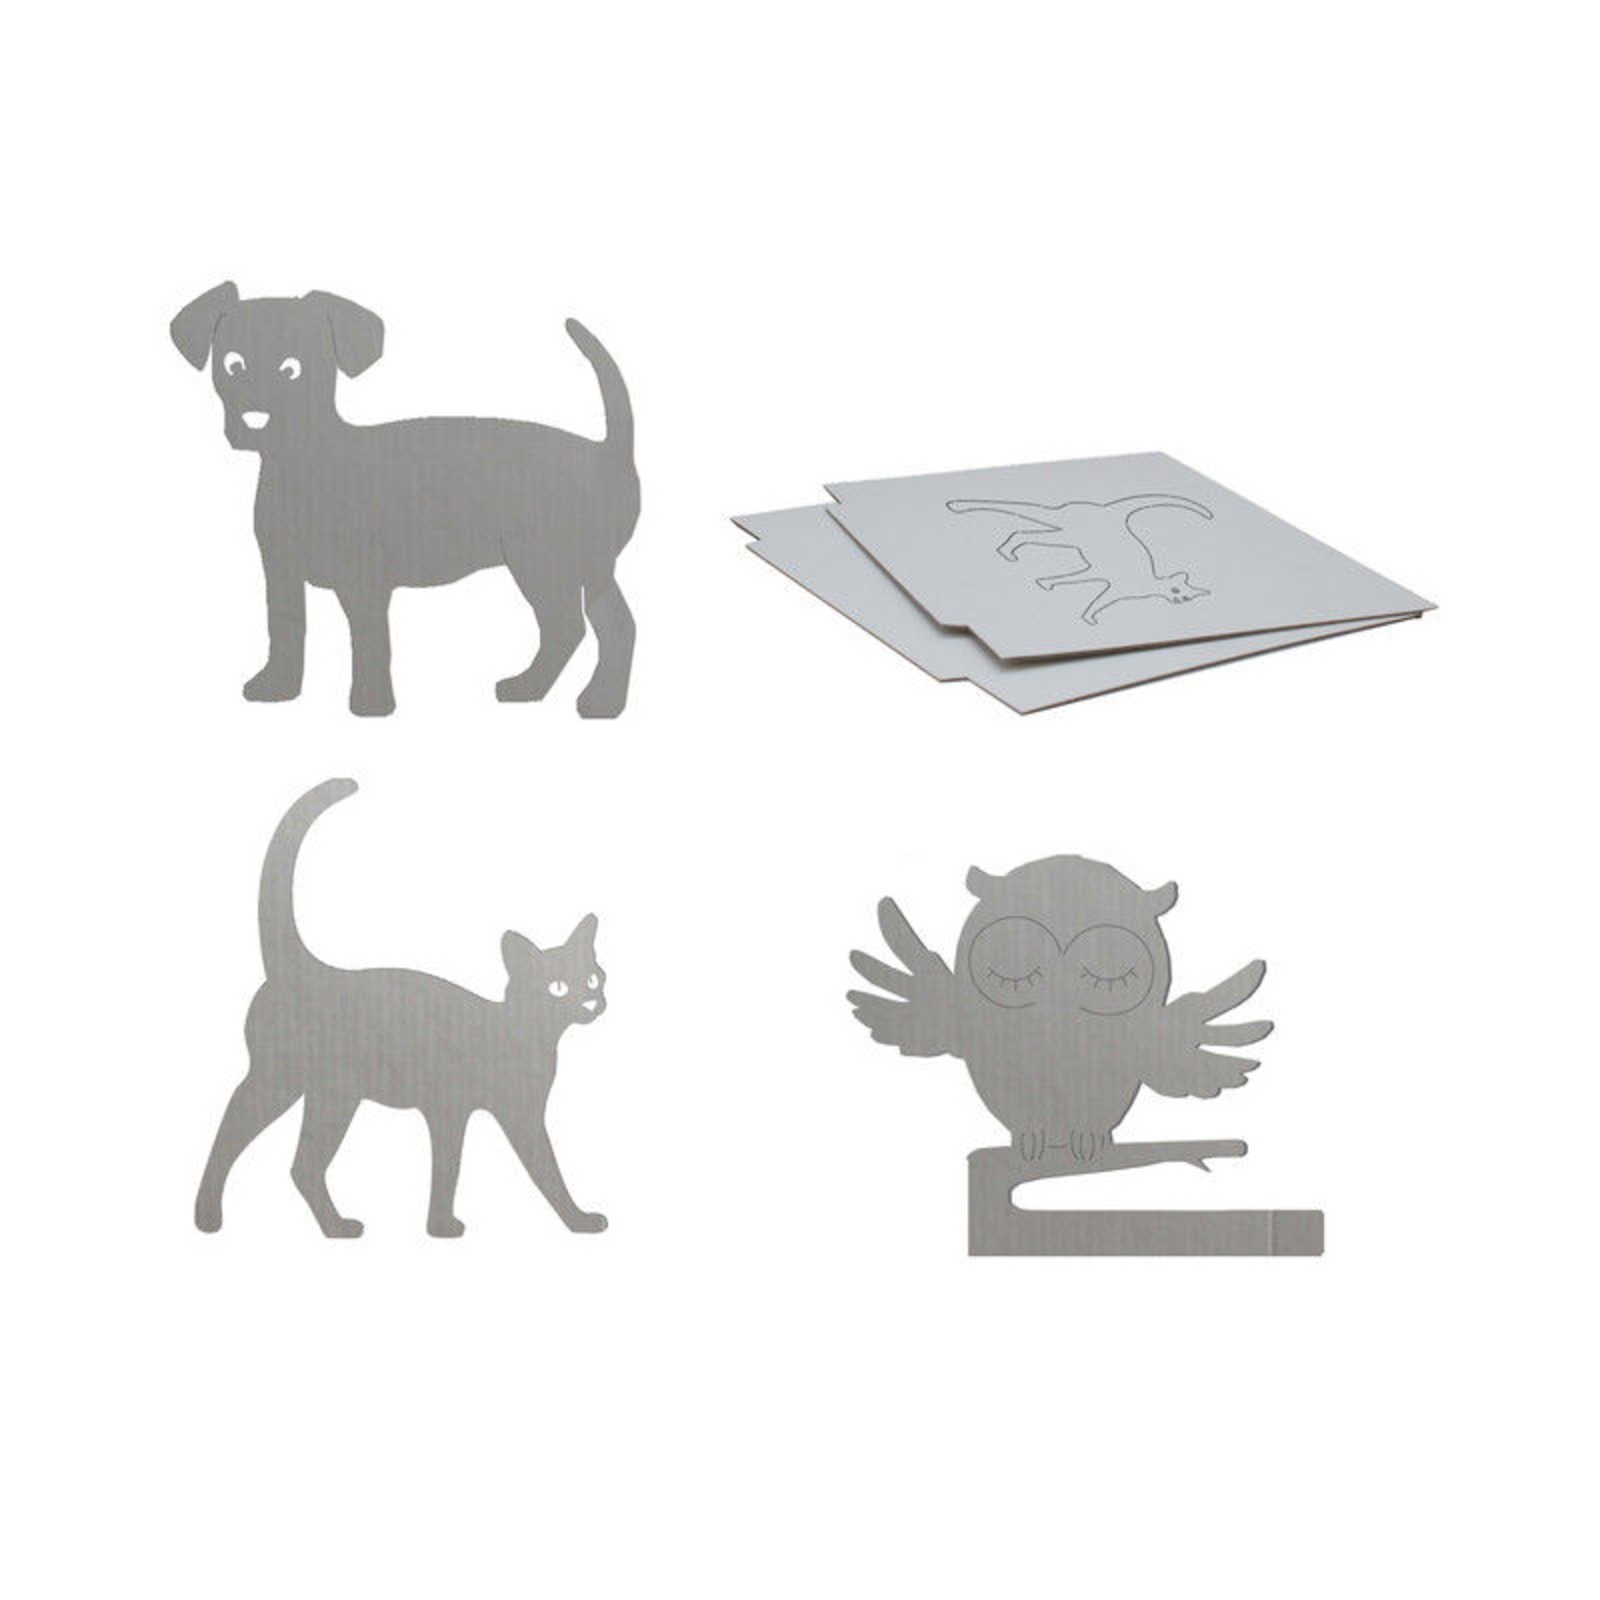 Kit de pintura con siluetas de gato, perro y búho